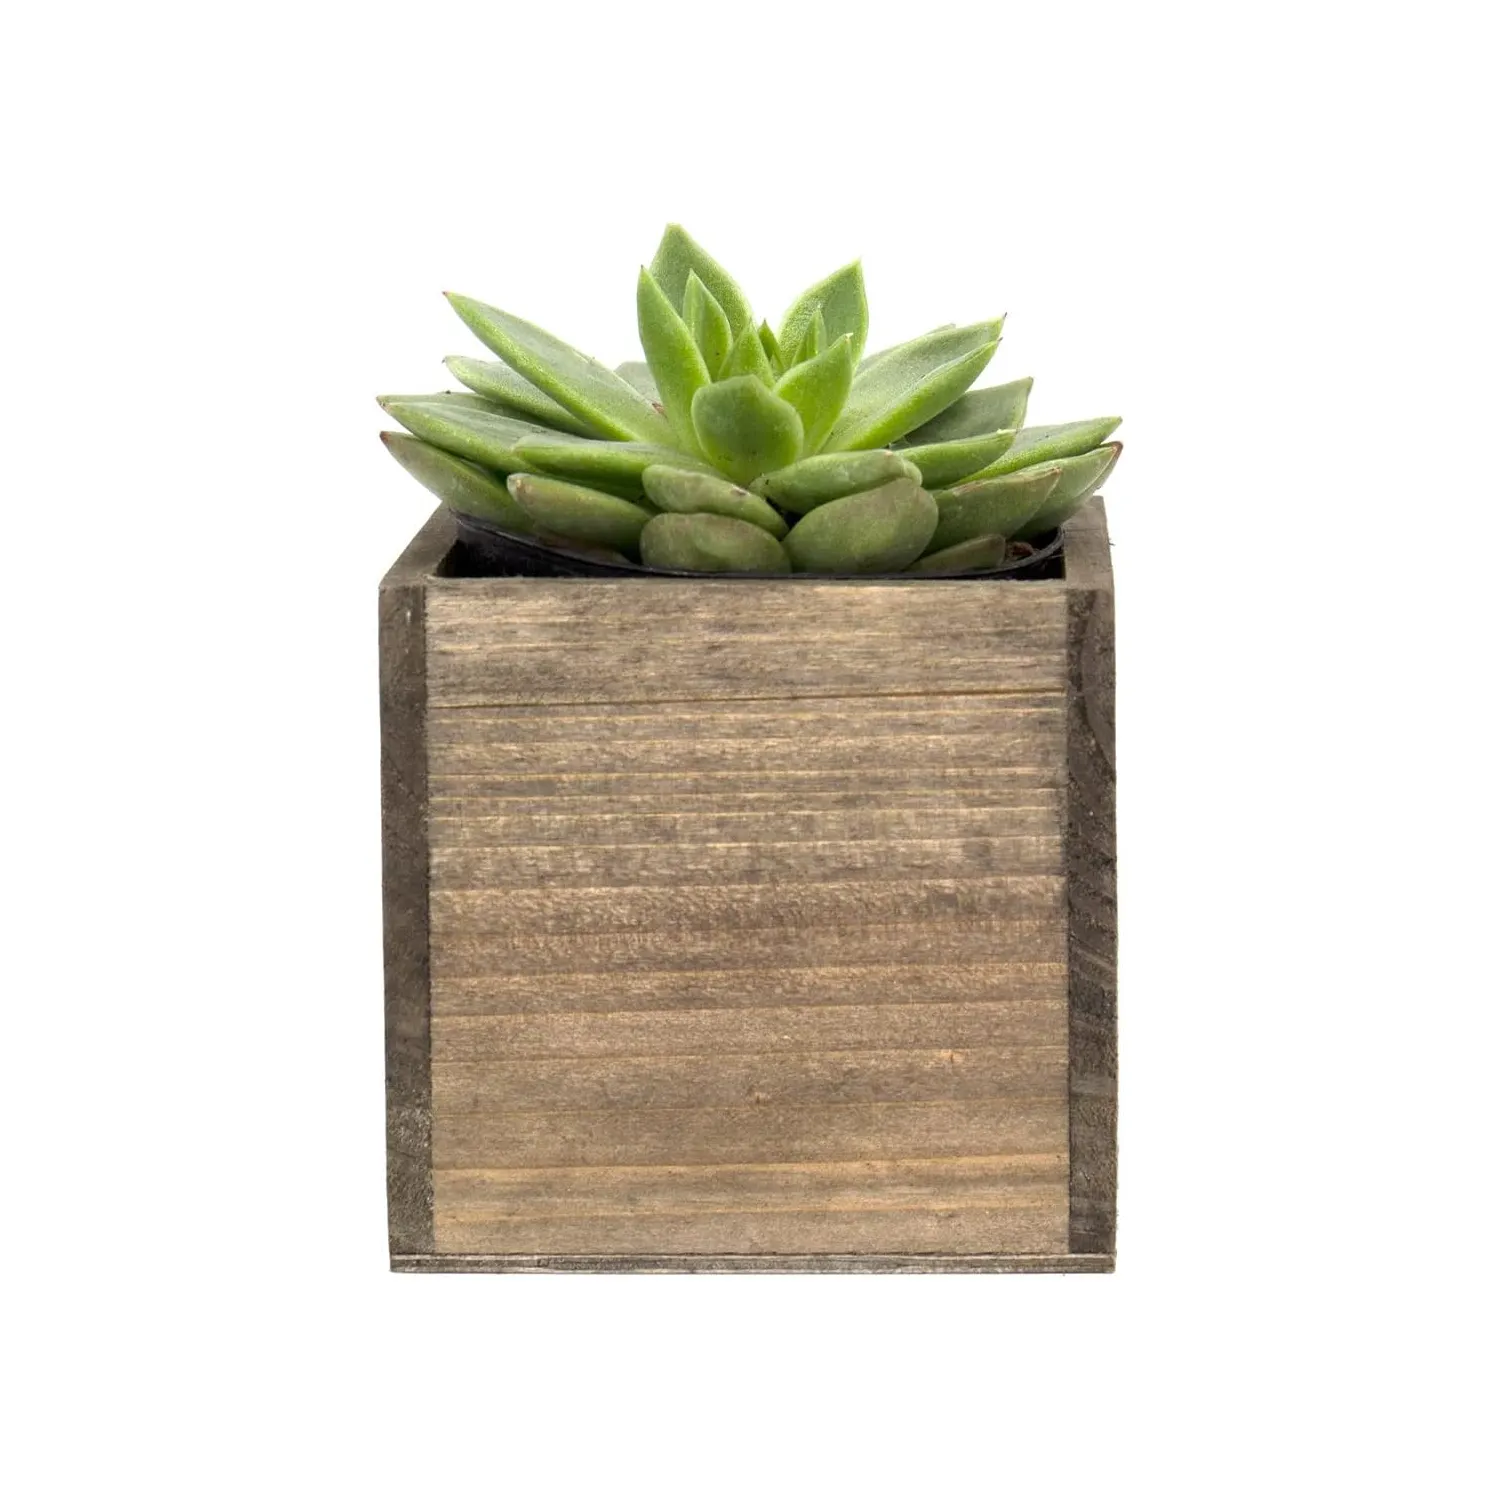 Cube Planter Box mit abnehmbarem Kunststoff Liner Multiple Size Choices Wood Square Planter